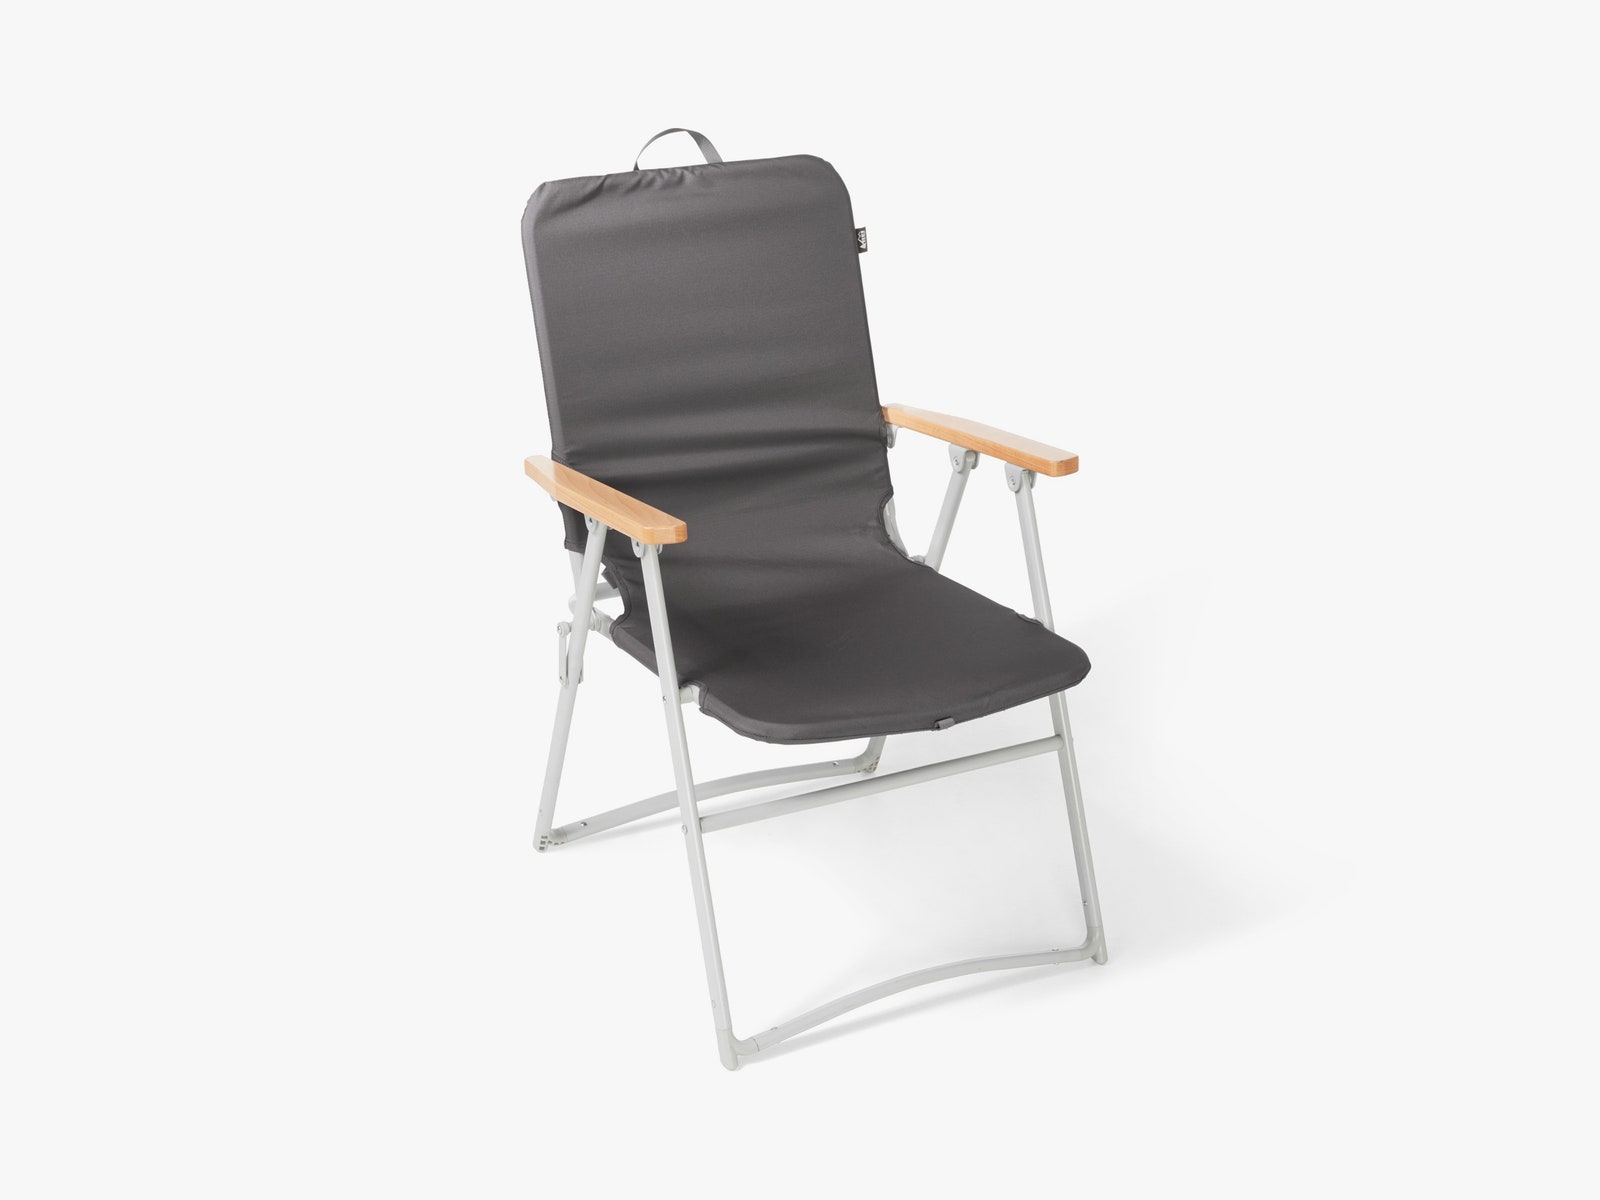 REI CoOp Outward Lawn Chair